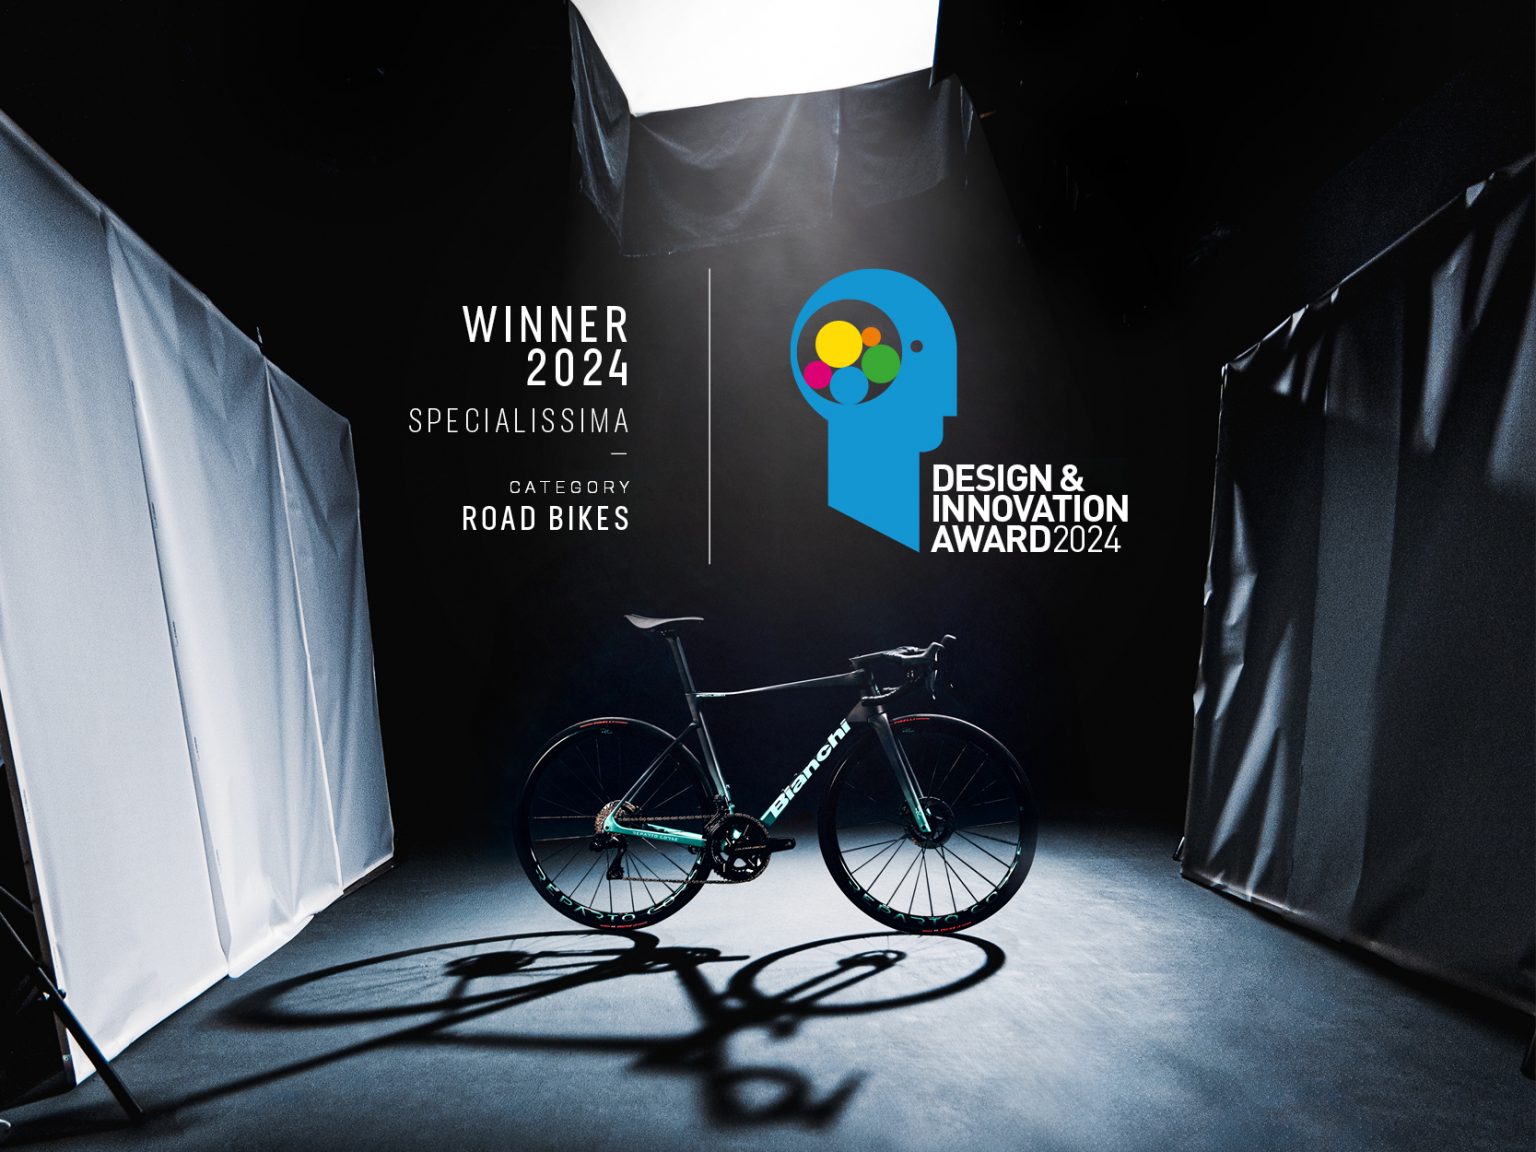 Bianchi design innovation award 2024 winner